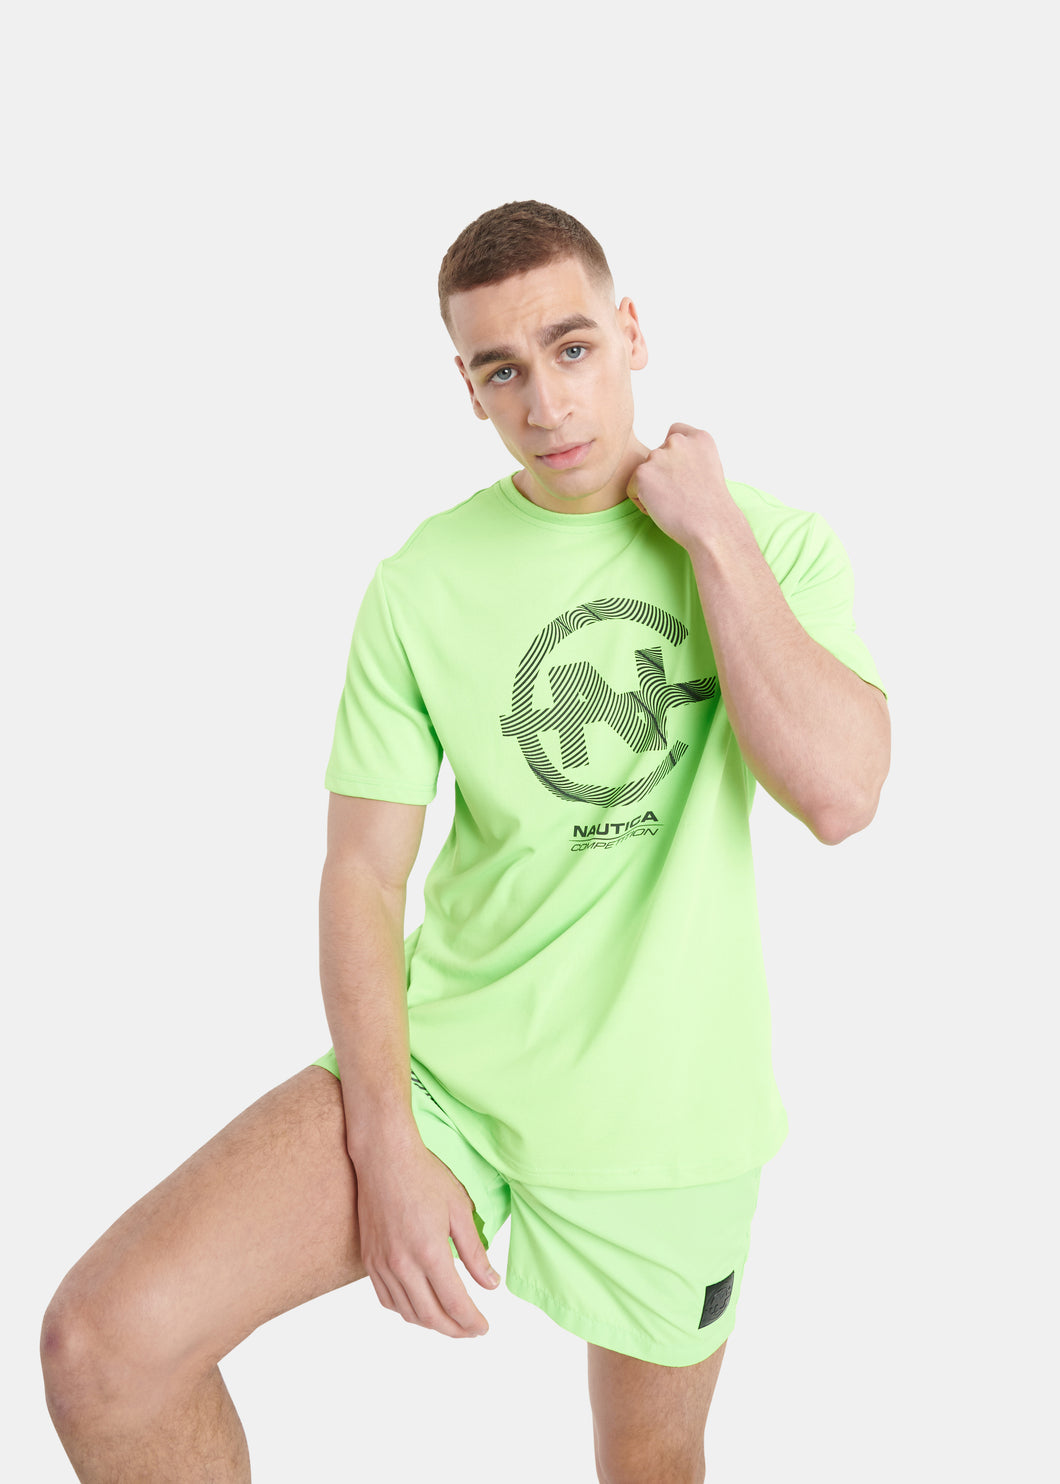 Mbuna T Shirt - Neon Green